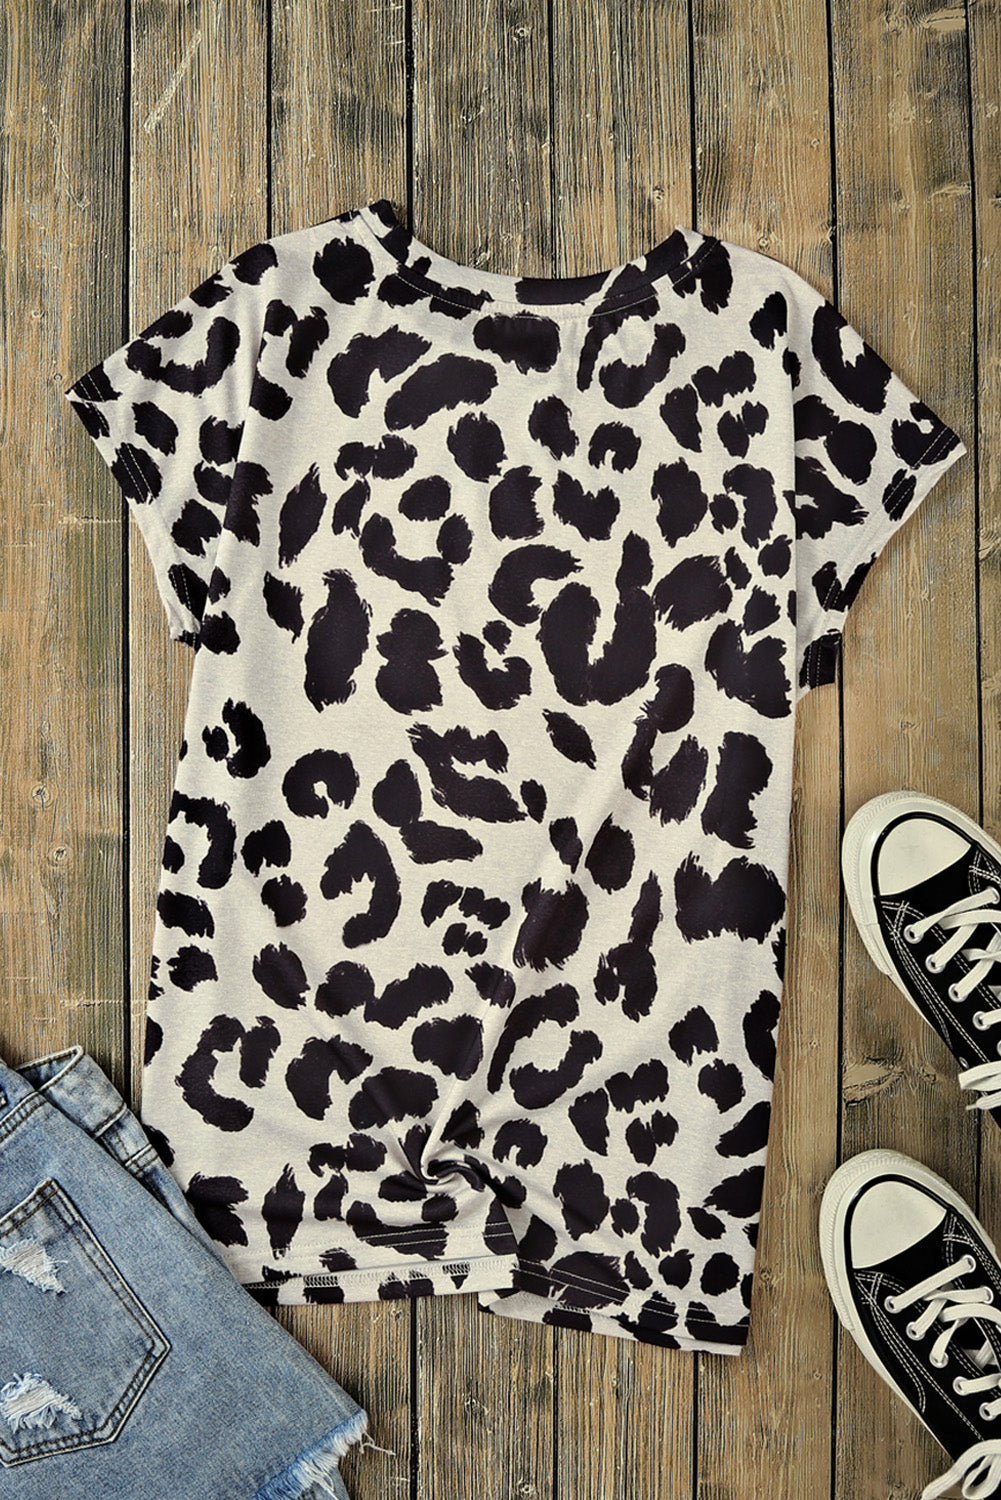 Leopard Western Cow Spots Printed Pumpkin Graphic T-shirt